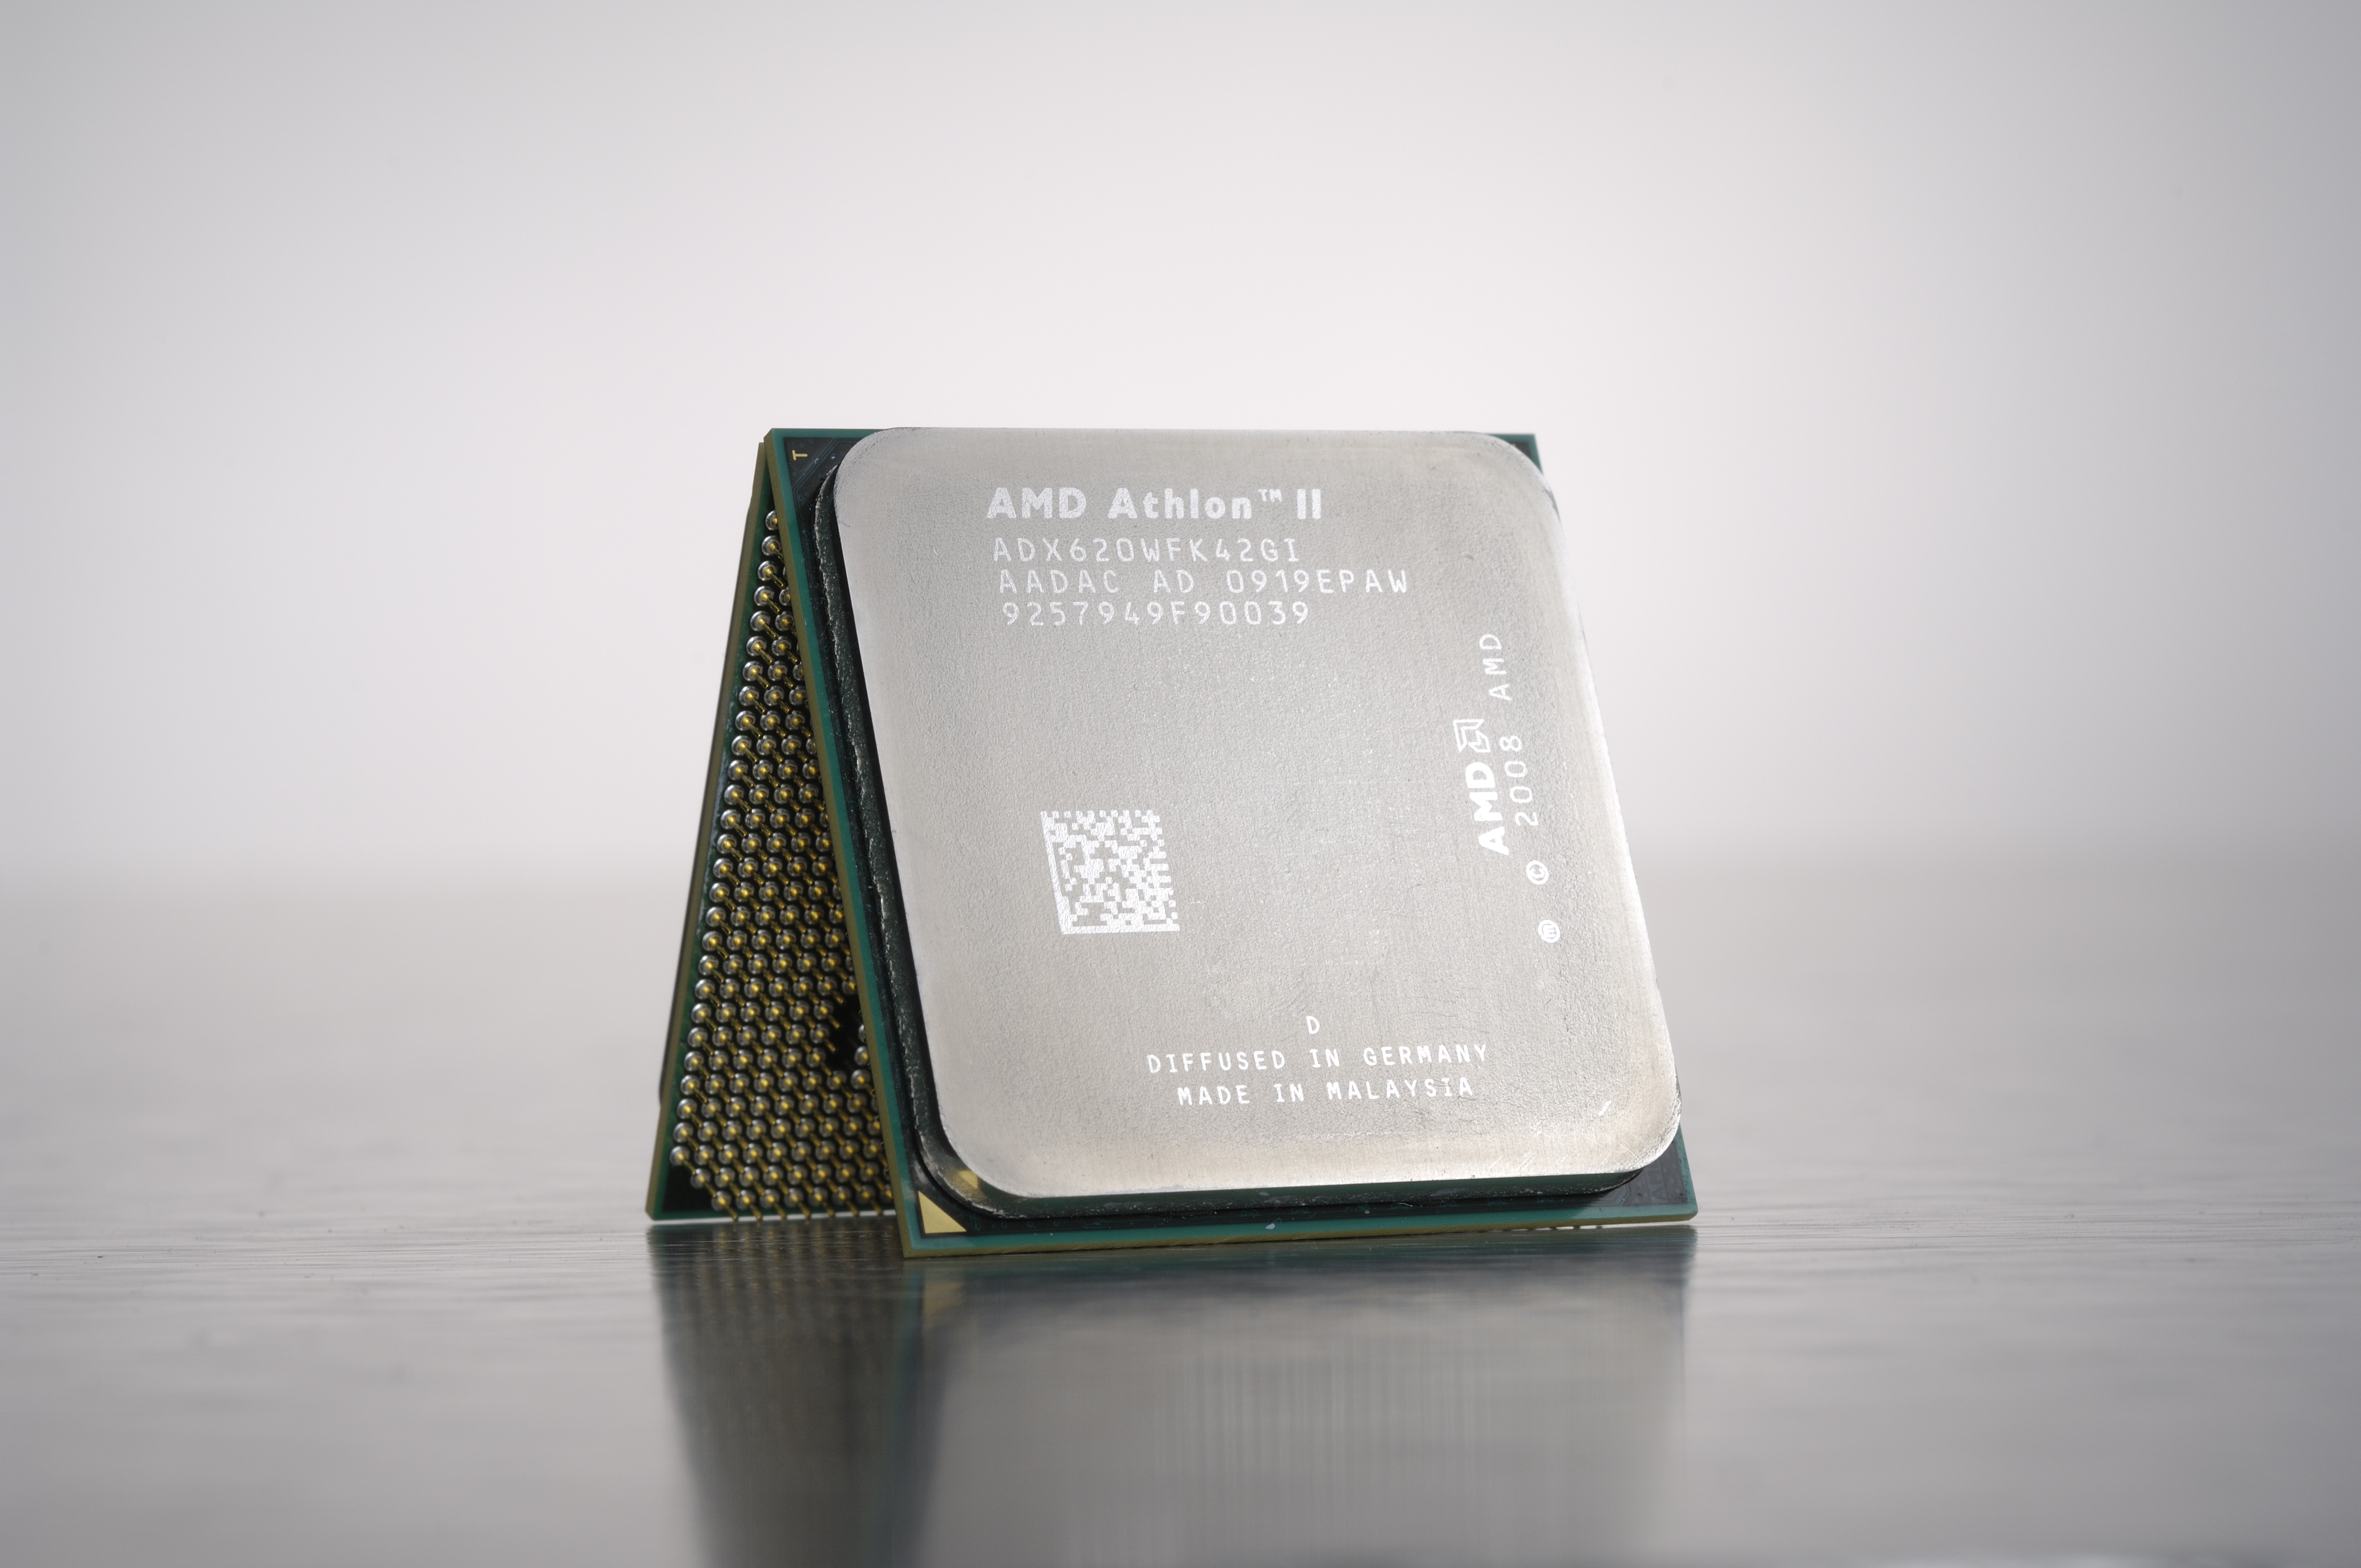 Amd phenom ii x6 processor. Процессор AMD Phenom II x6 1090t. Процессор AMD Athlon II x2 250. Процессор AMD Phenom II x4 965. Процессор AMD Athlon x3 435.